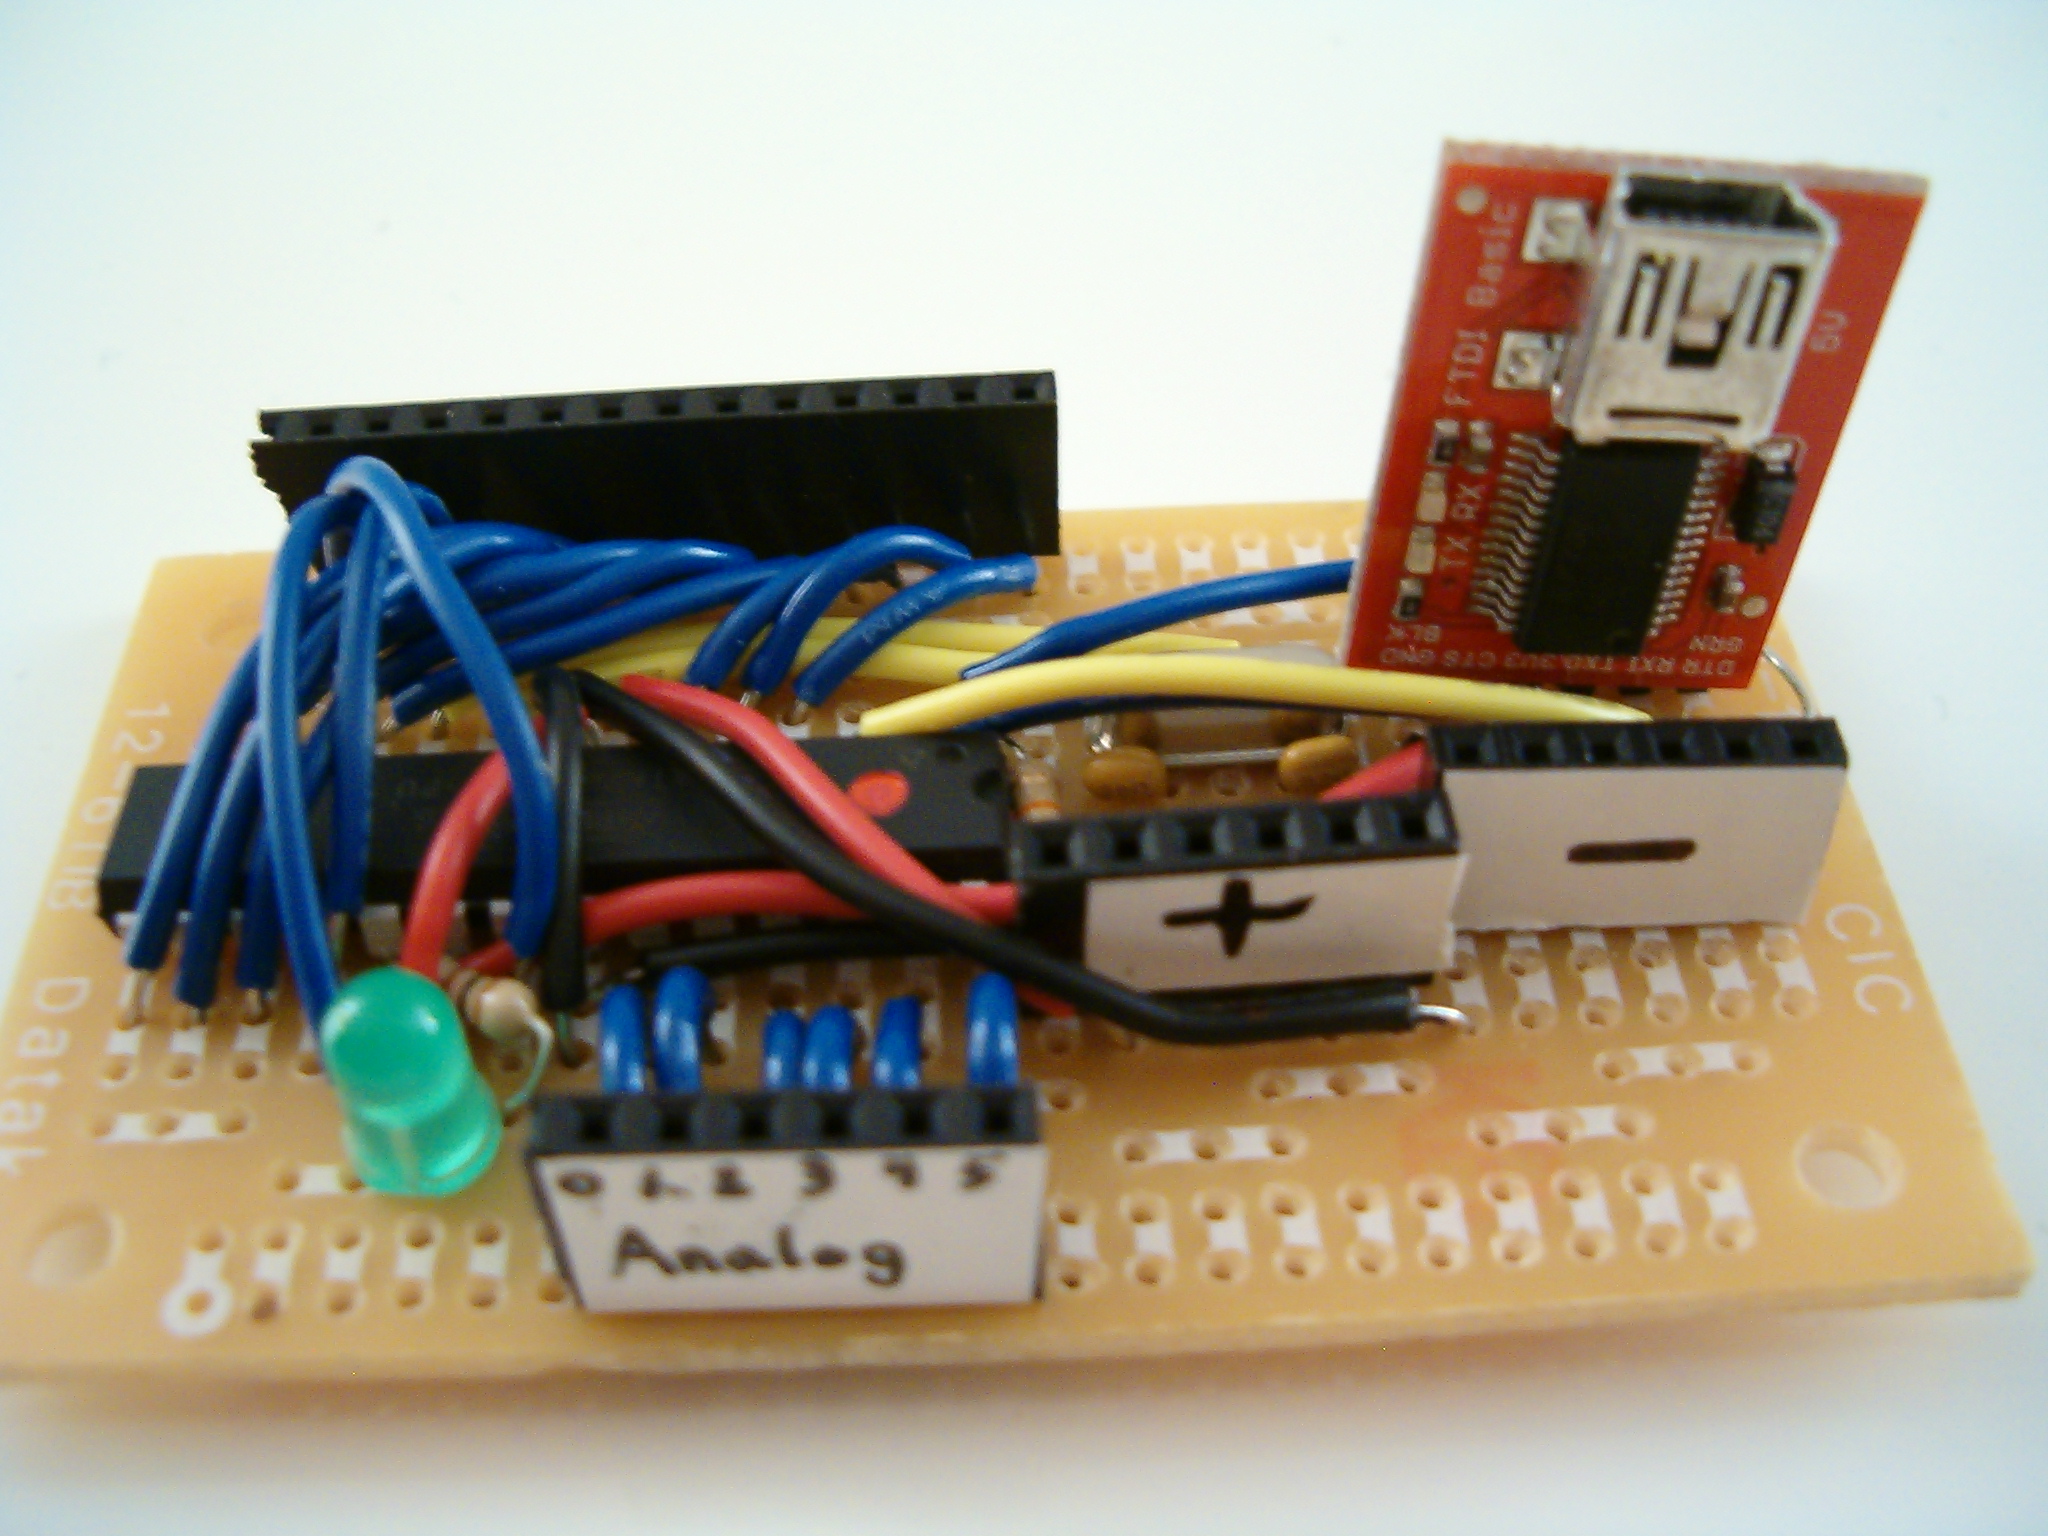 Perfduino Build Your Own Arduino